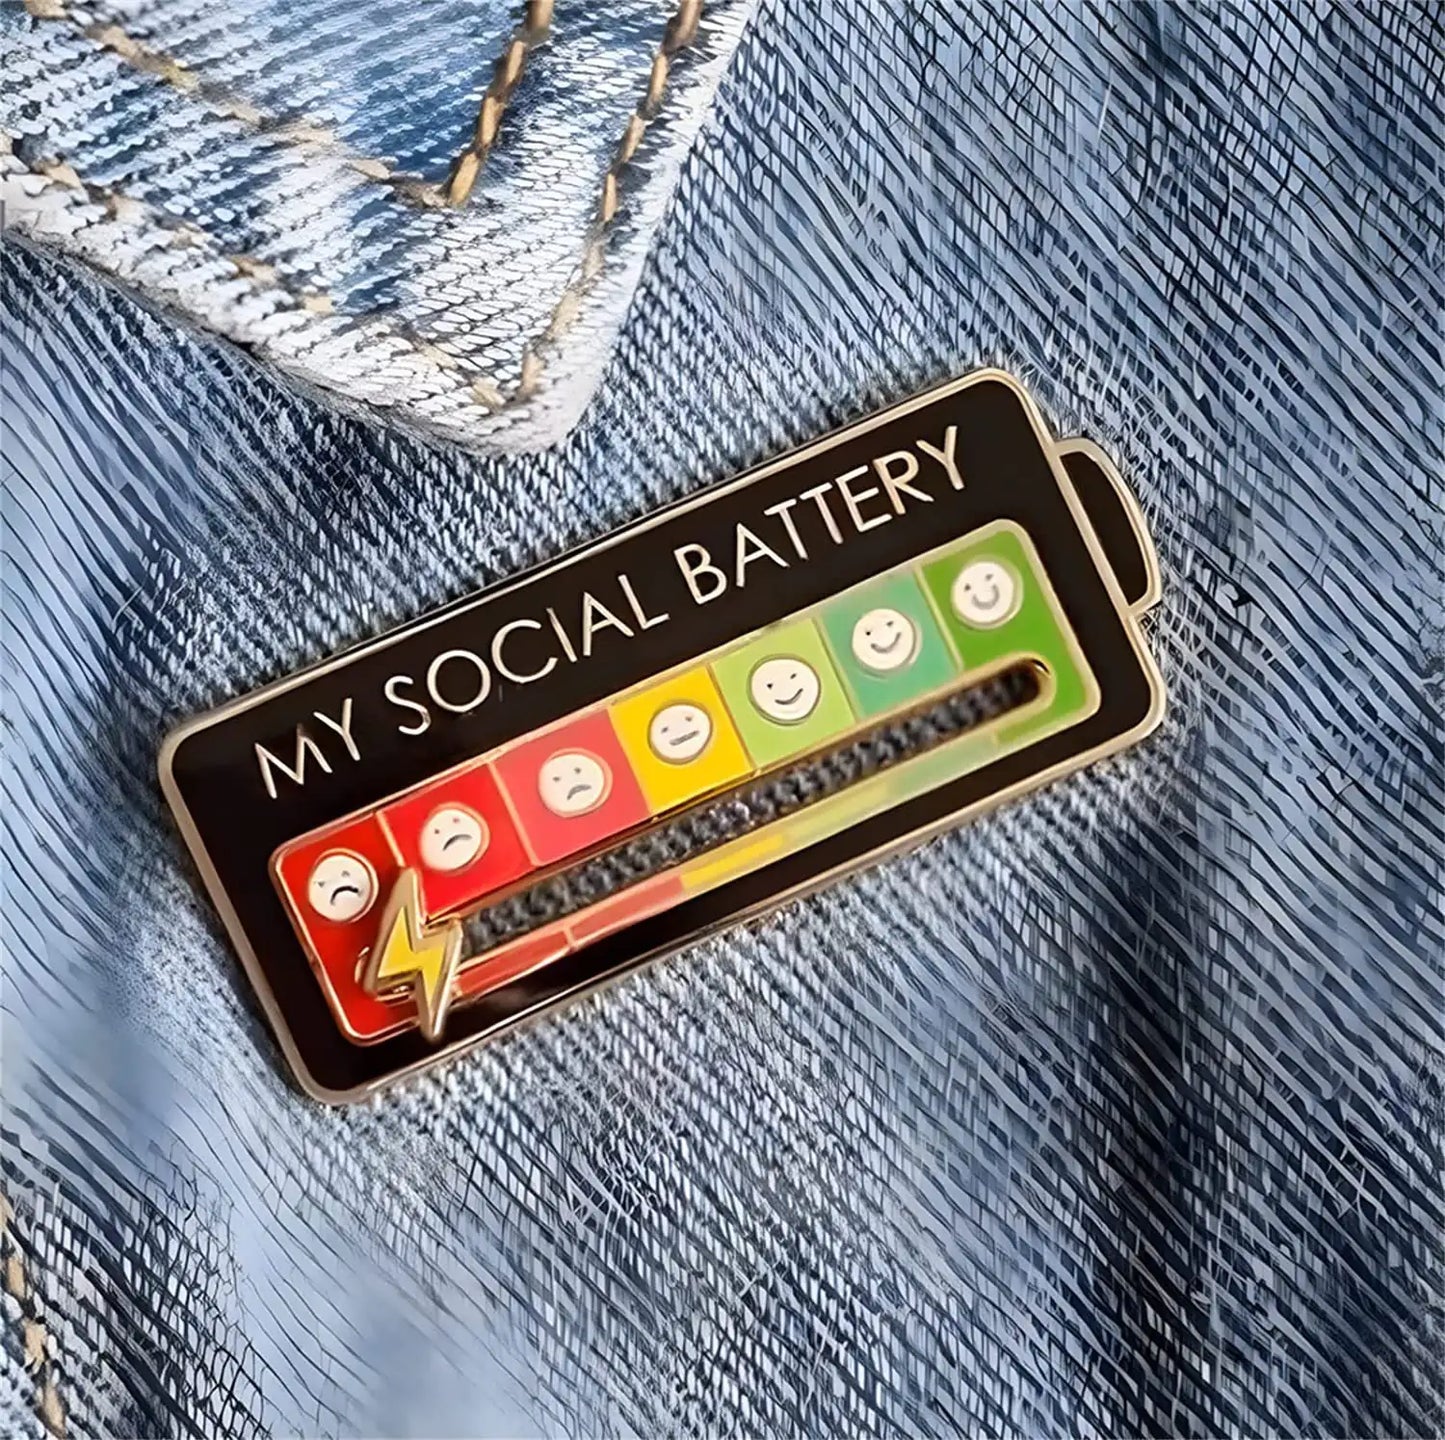 Pin Social Battery